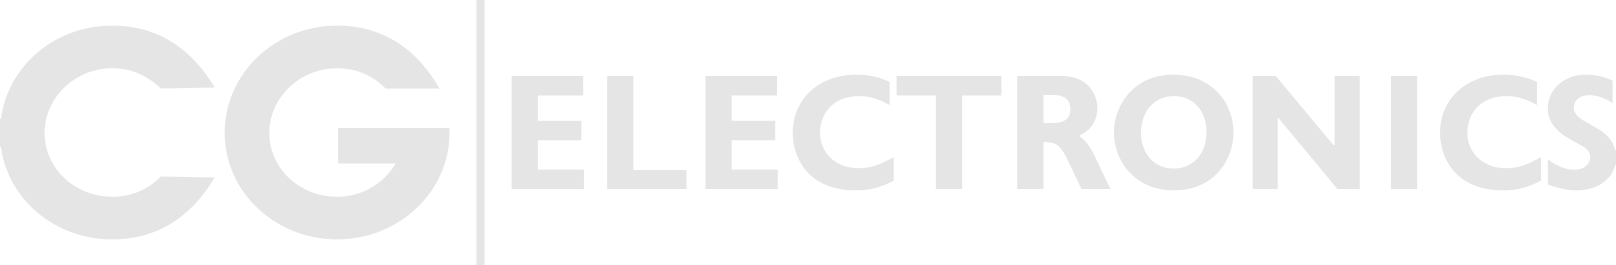 LG Electronics Logo - Compare